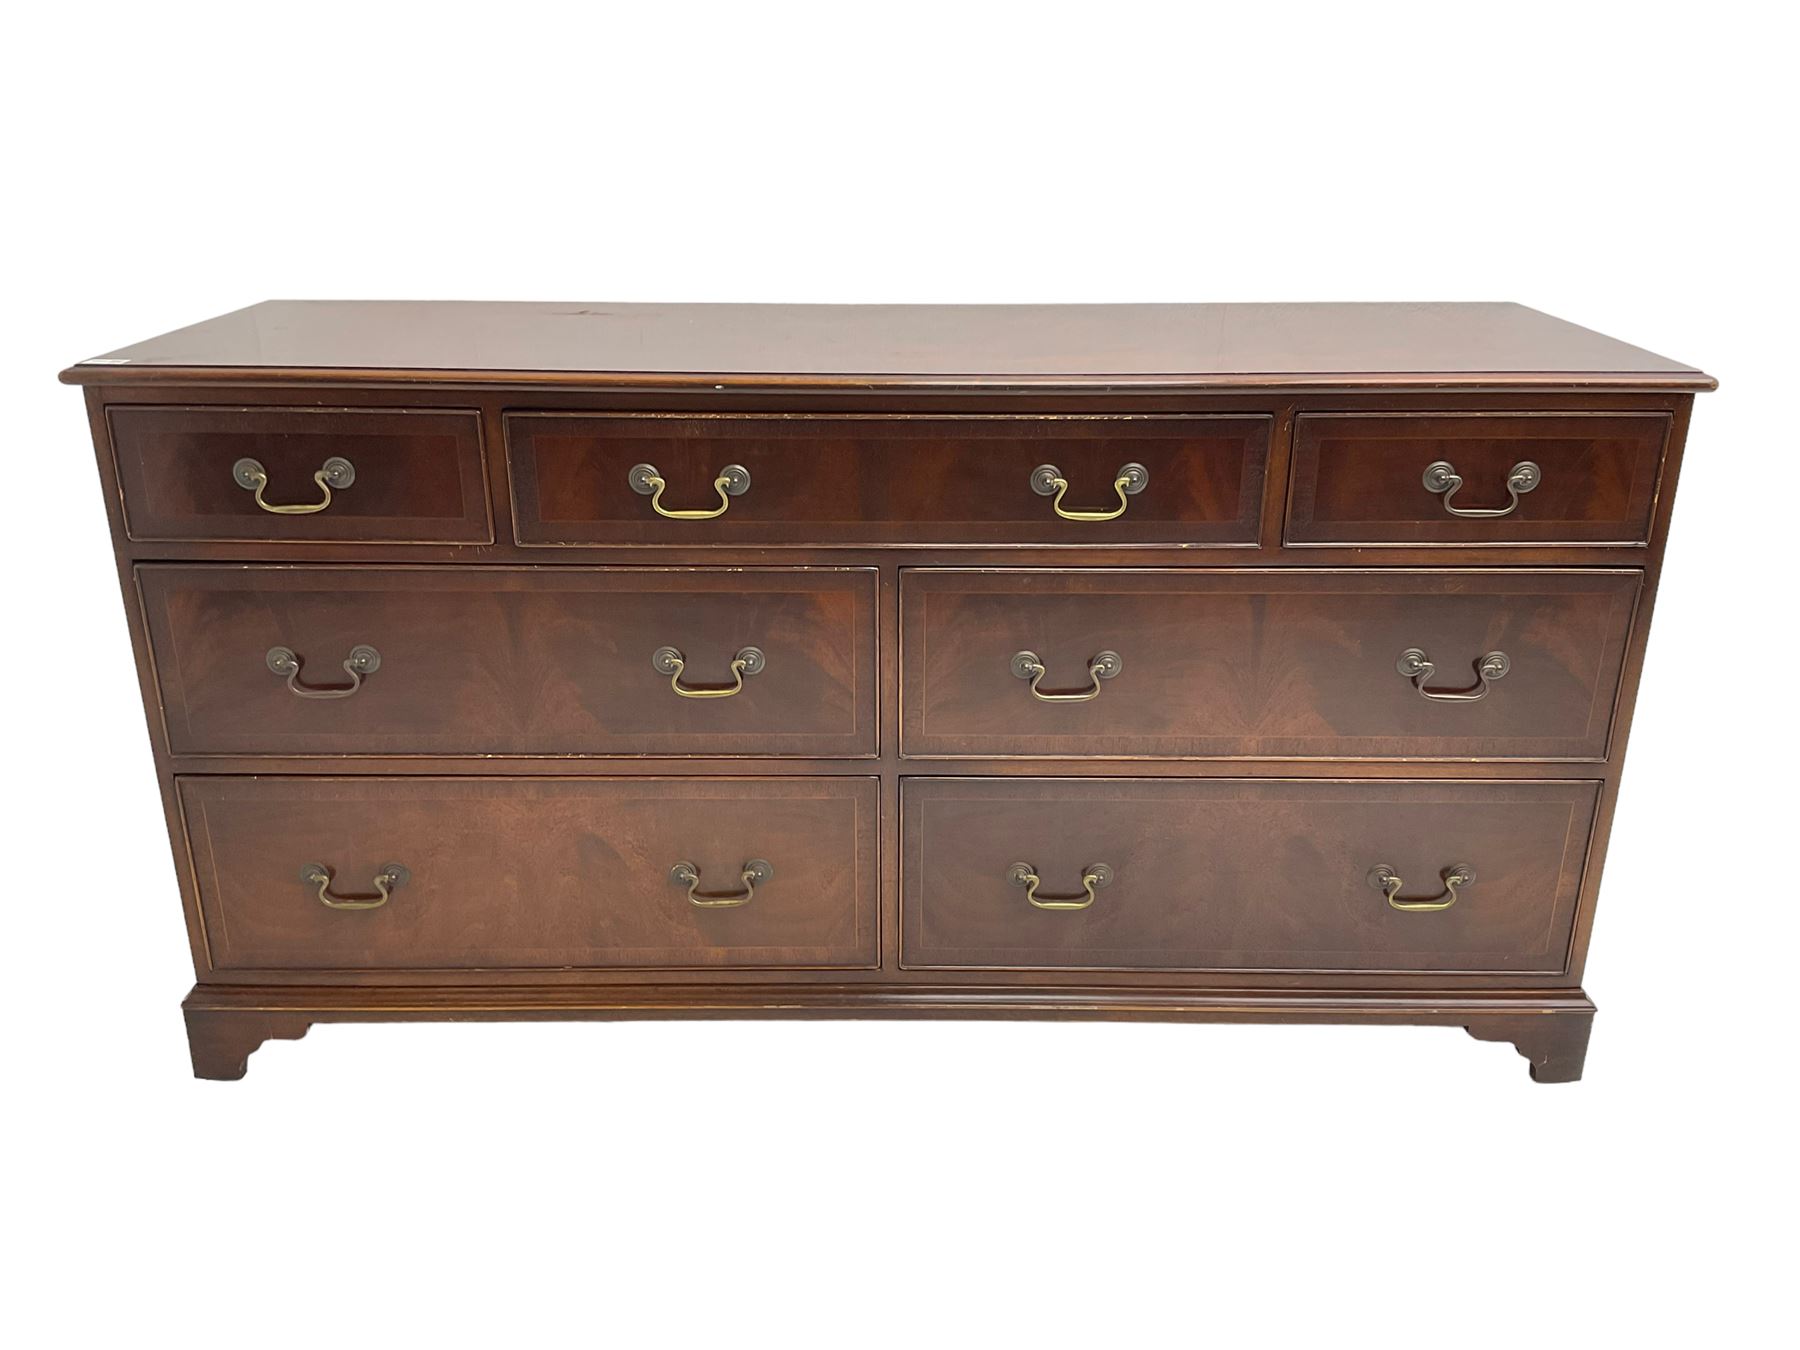 Georgian design mahogany chest - Image 2 of 8